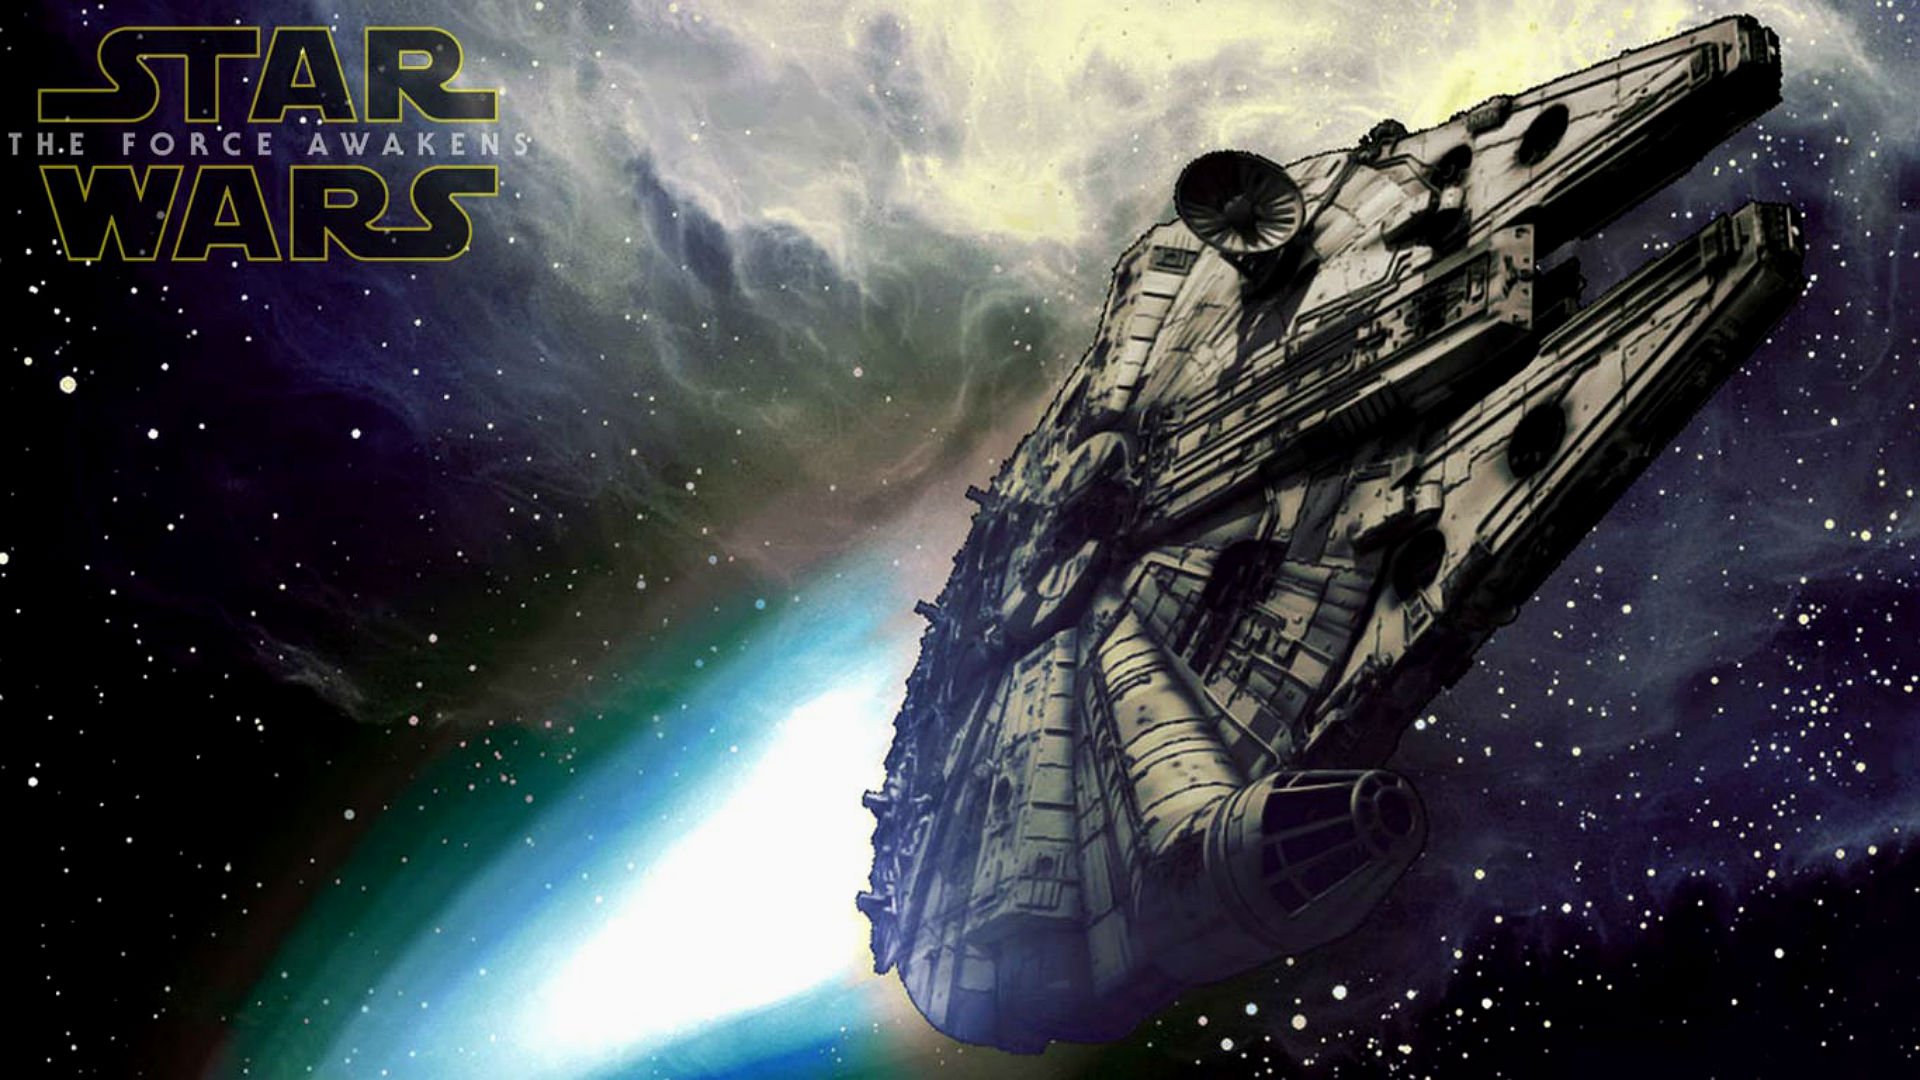 STAR WARS FORCE AWAKENS sci fi action adventure disney 1star wars